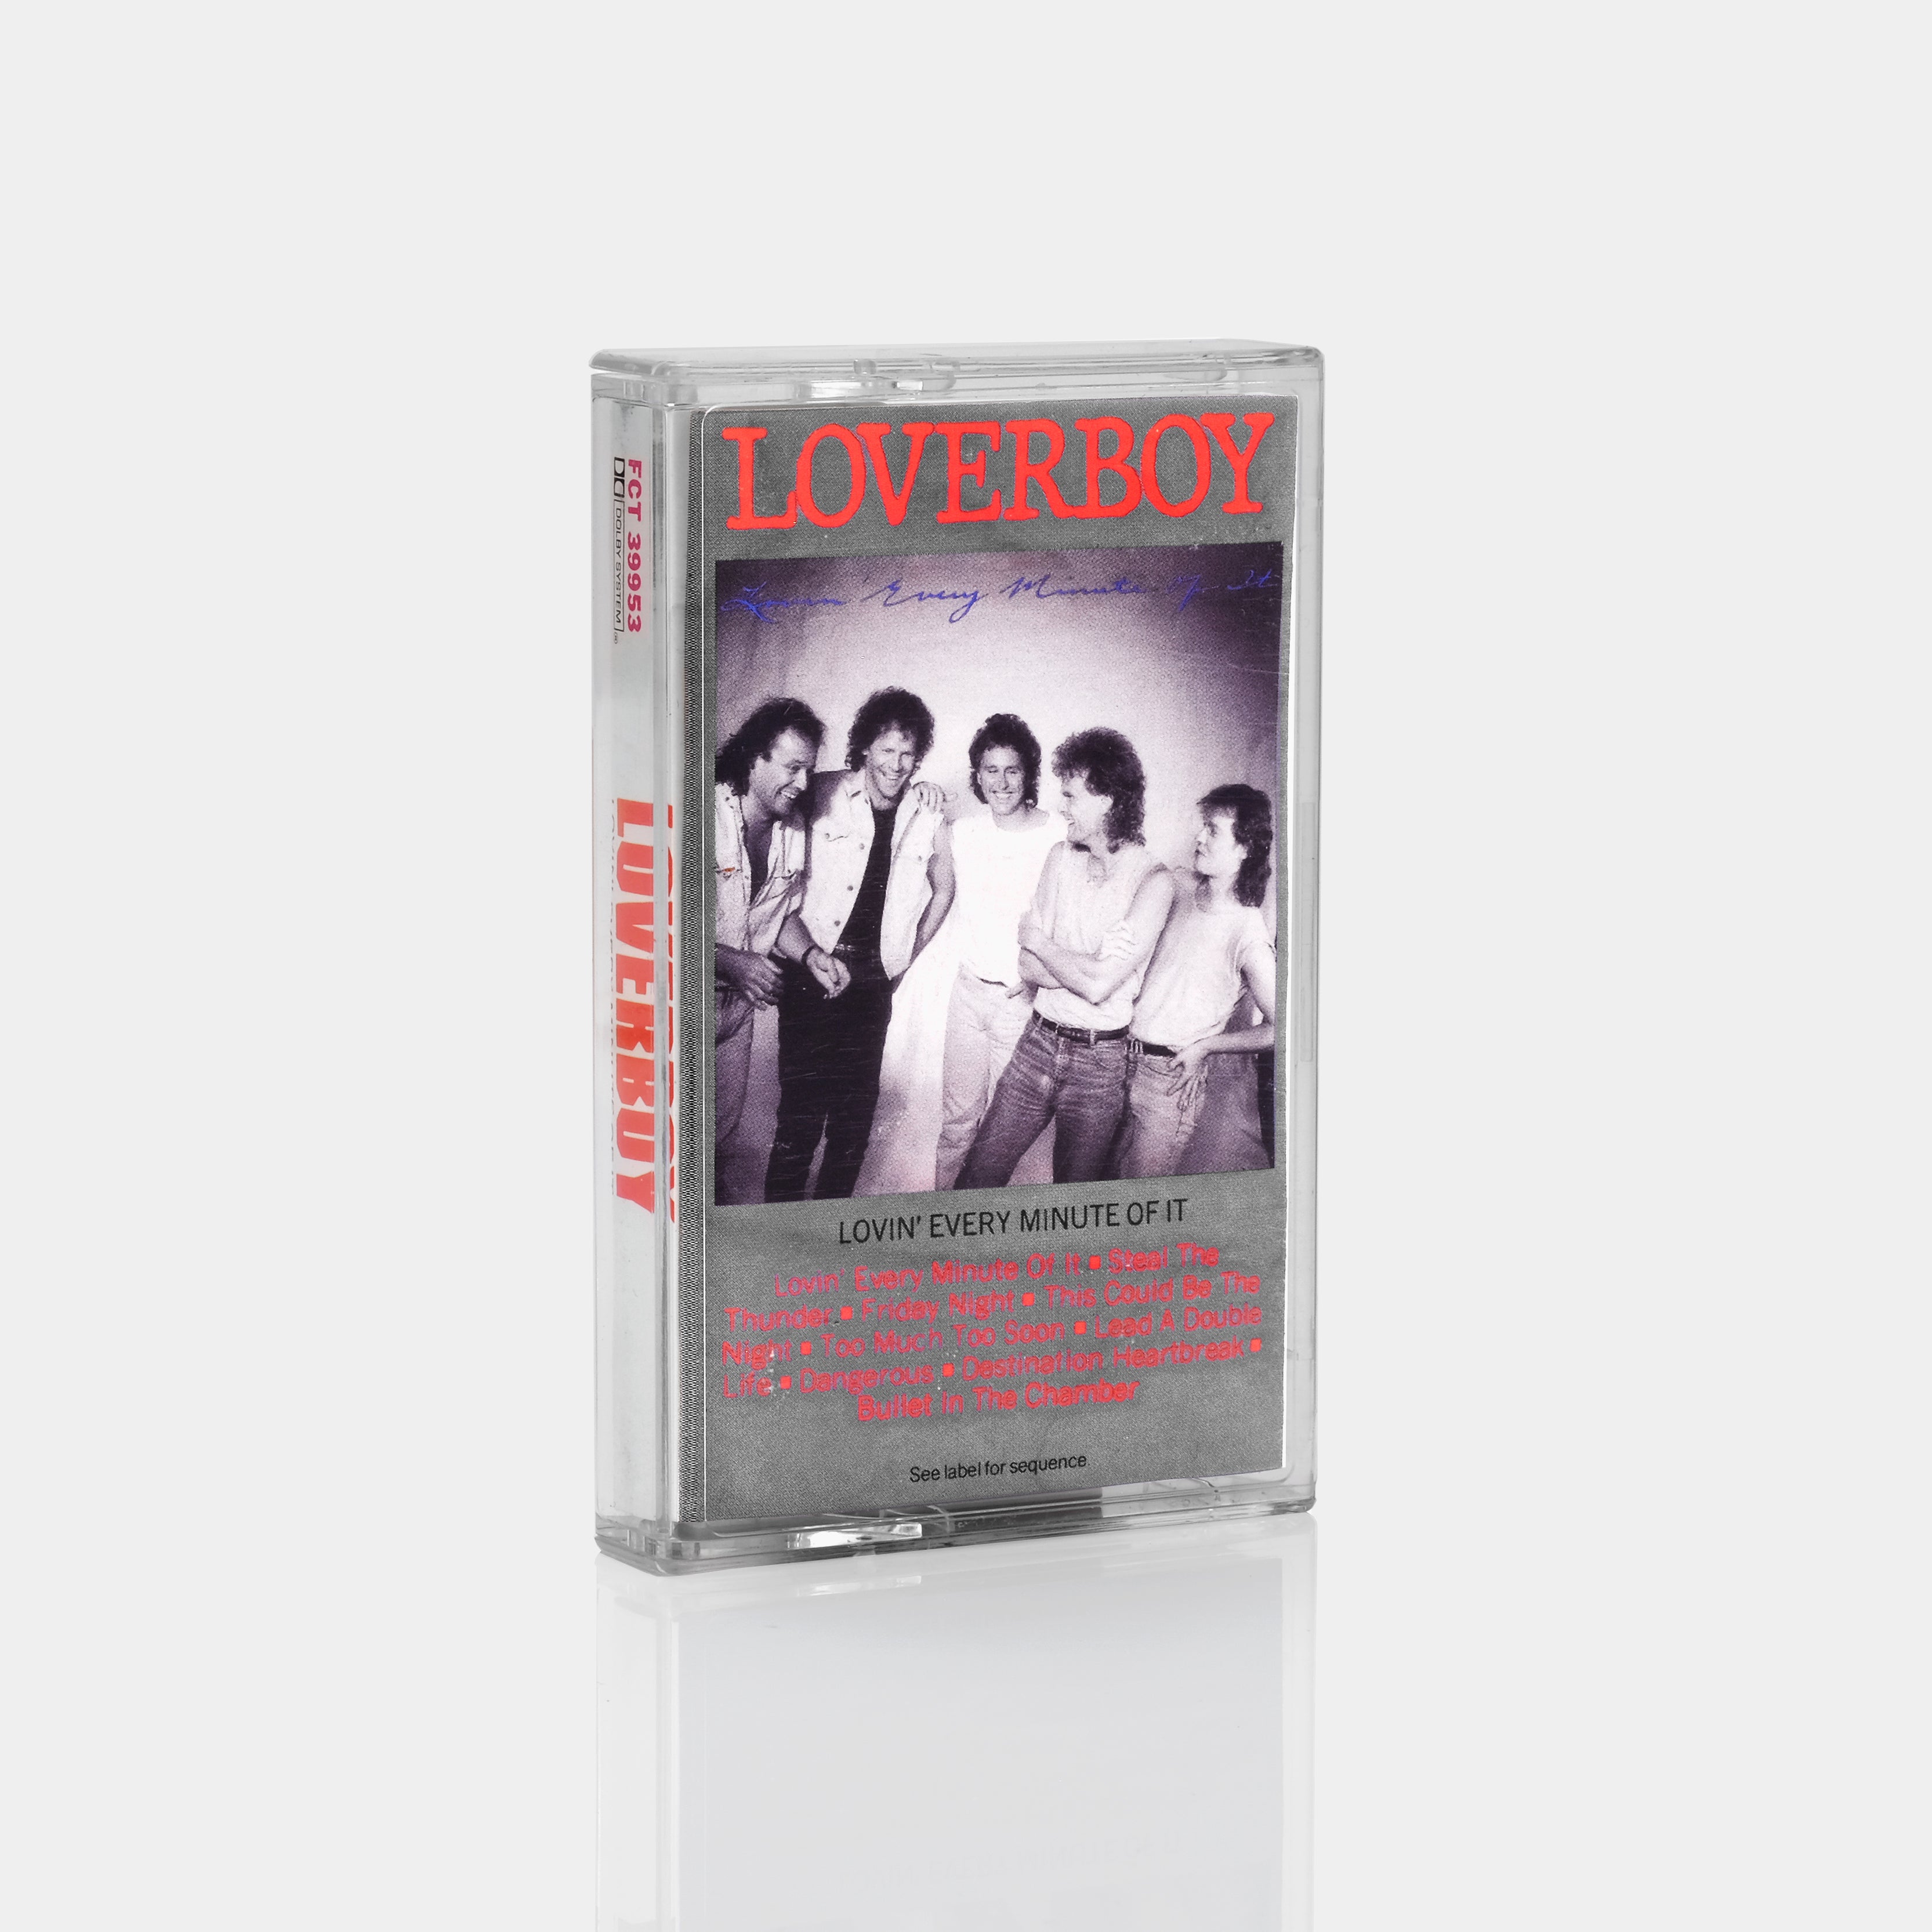 Loverboy - Lovin' Every Minute Of It Cassette Tape